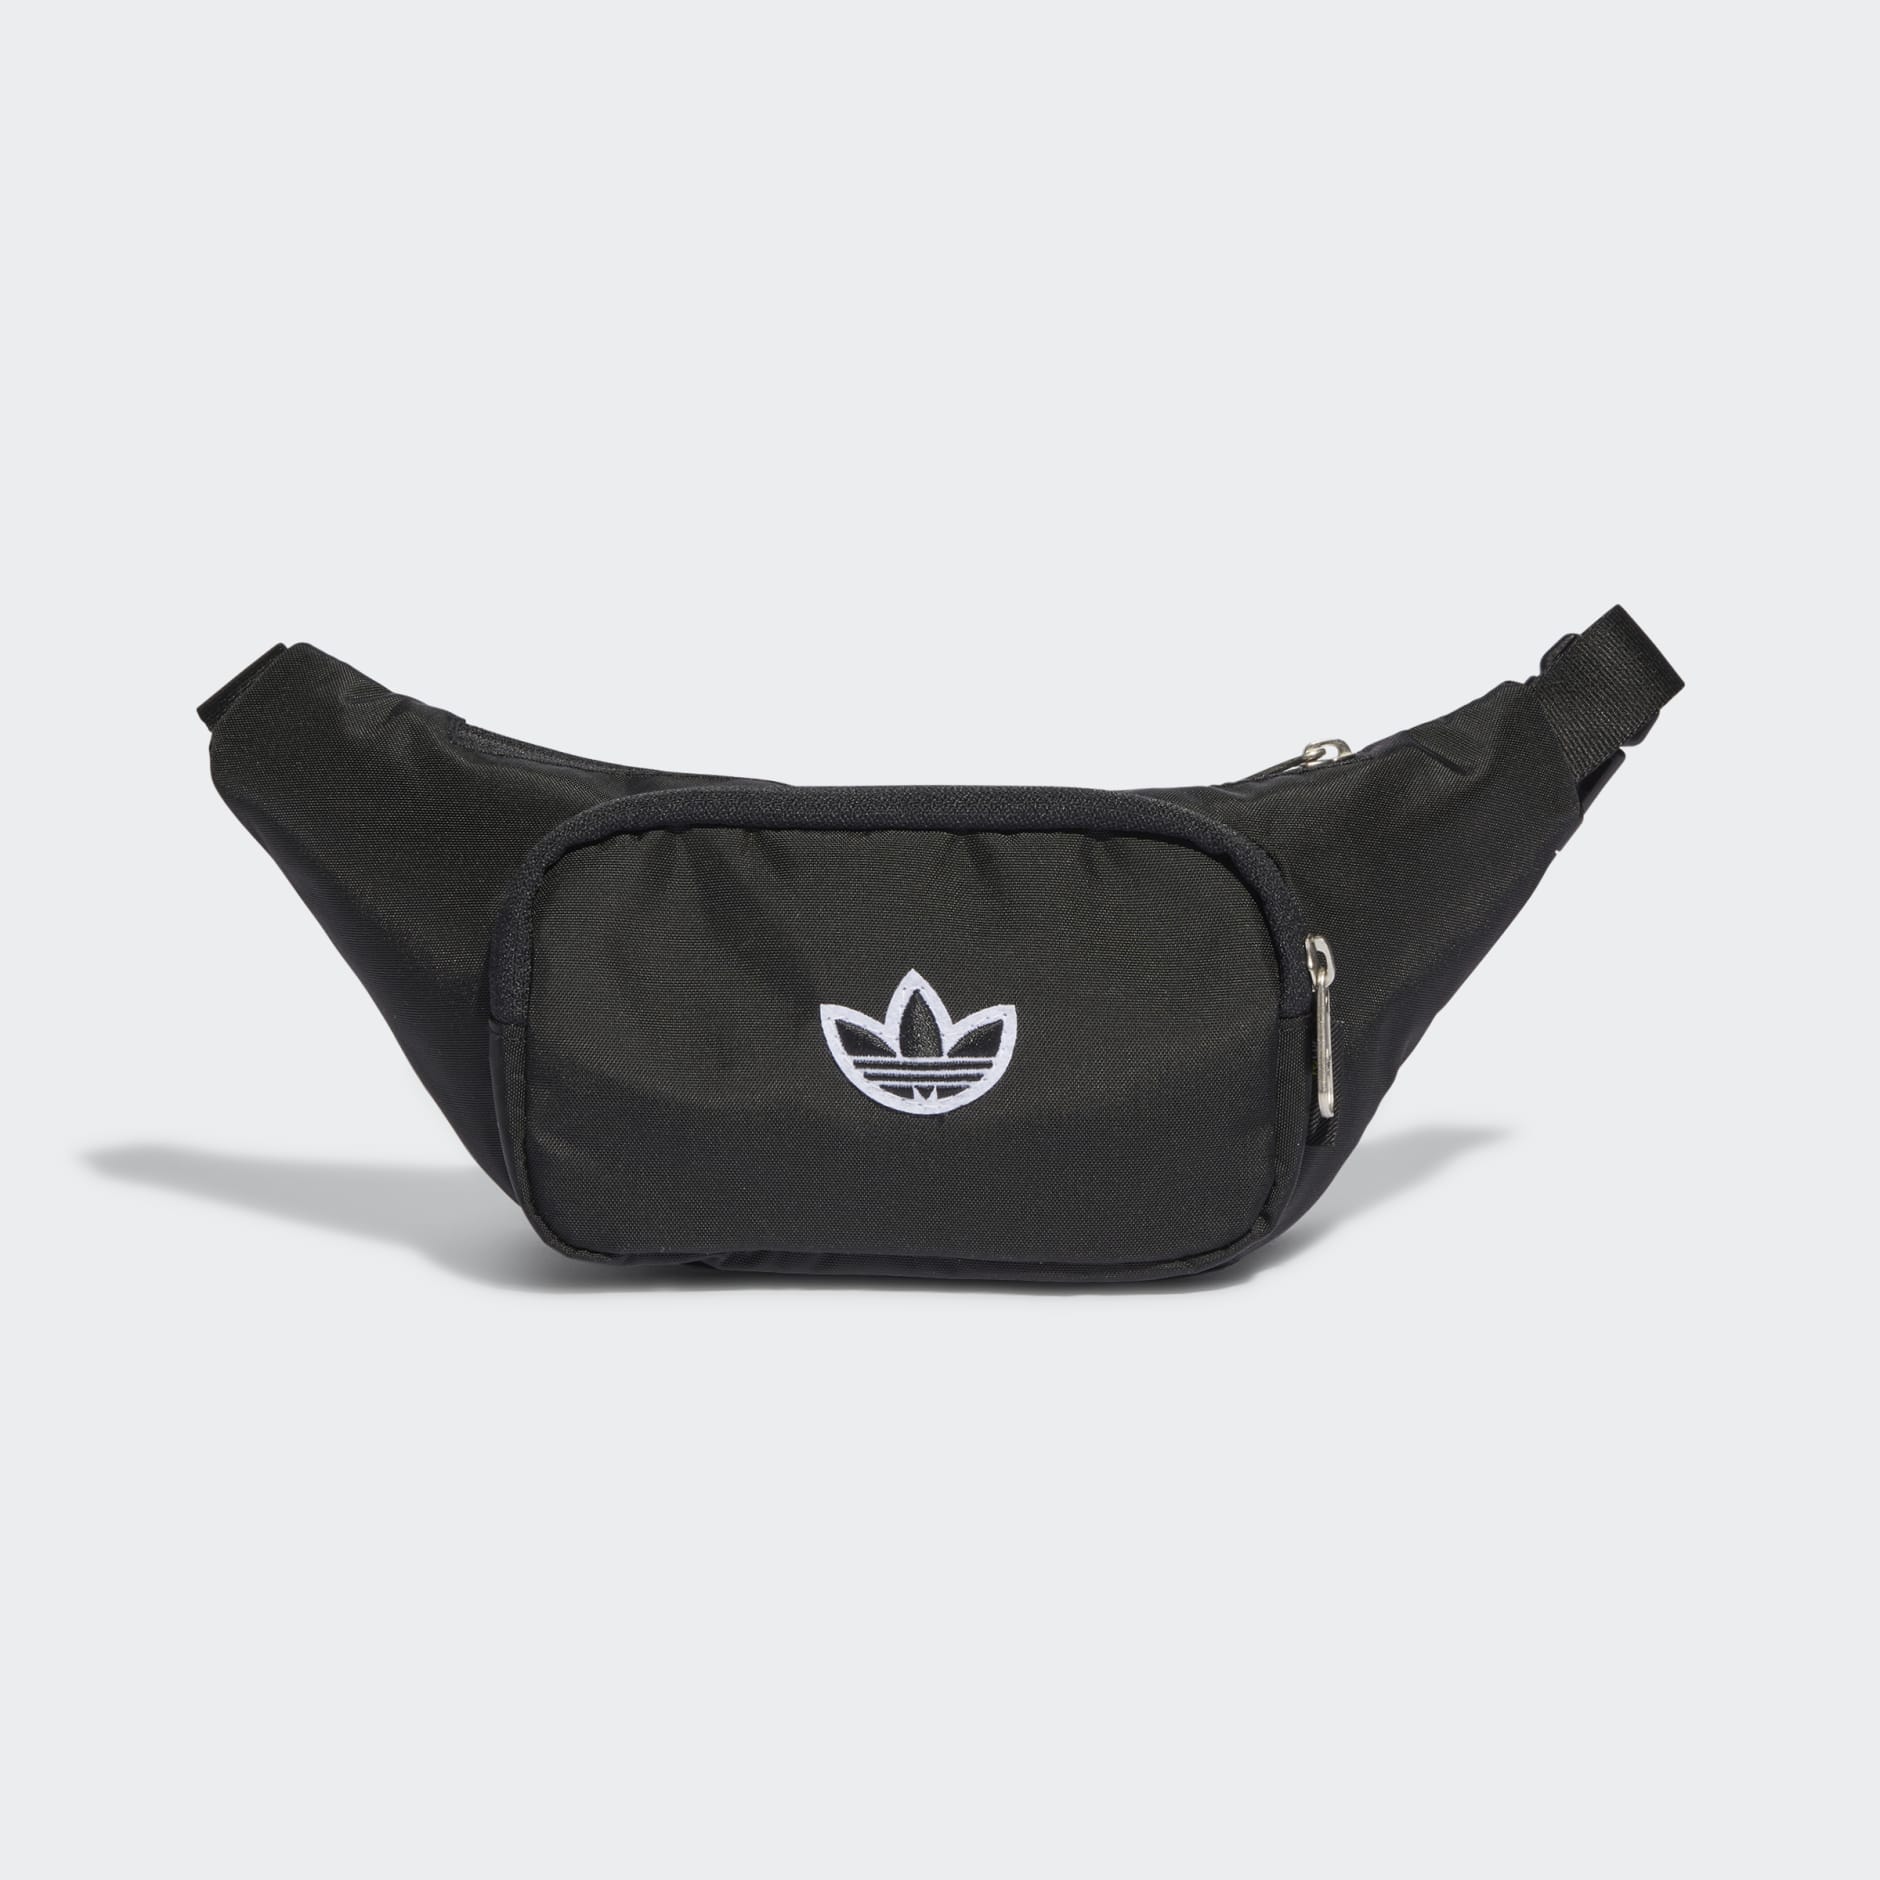 Adidas Unisex Waist Bag Pouch Black ORIGINALS IJ5007 Bag Premium Essentials  | eBay